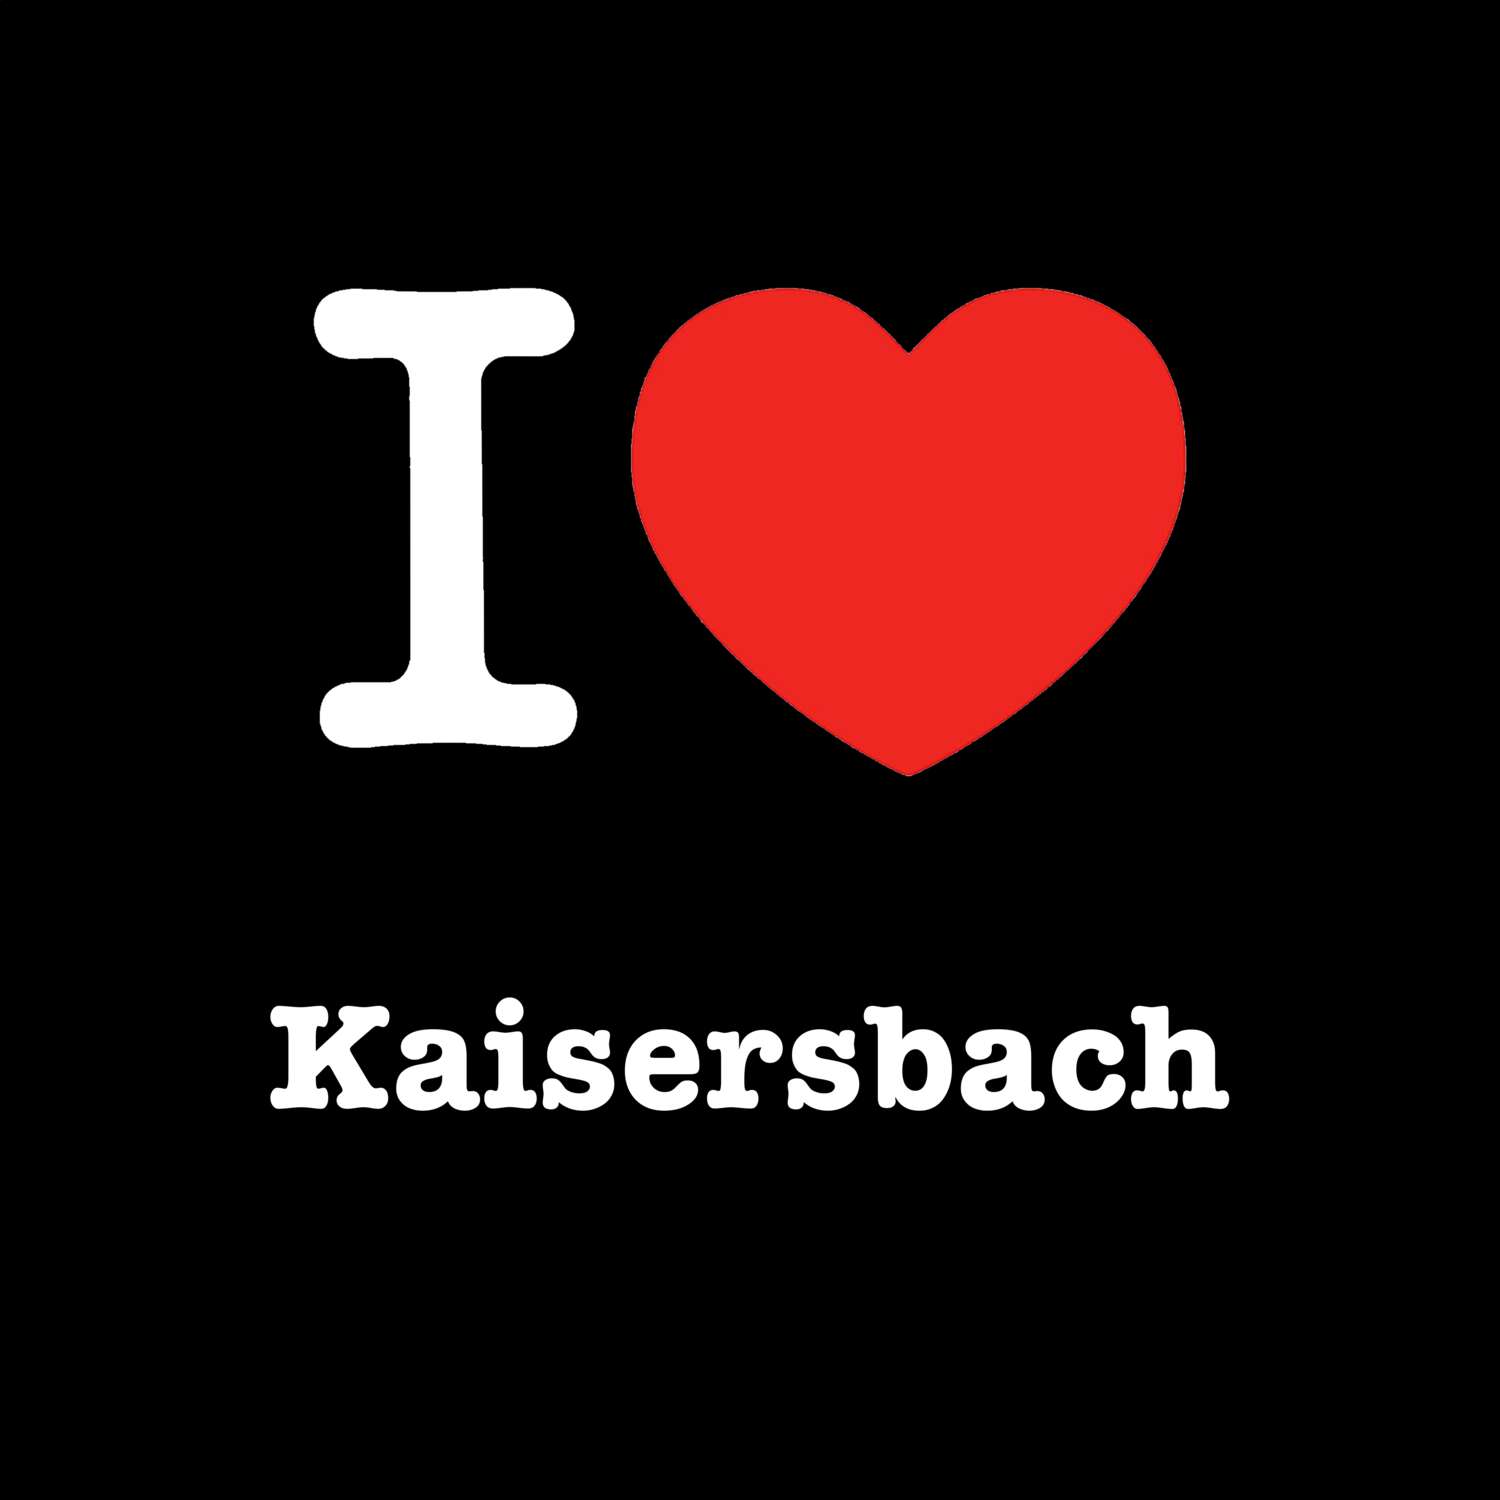 Kaisersbach T-Shirt »I love«